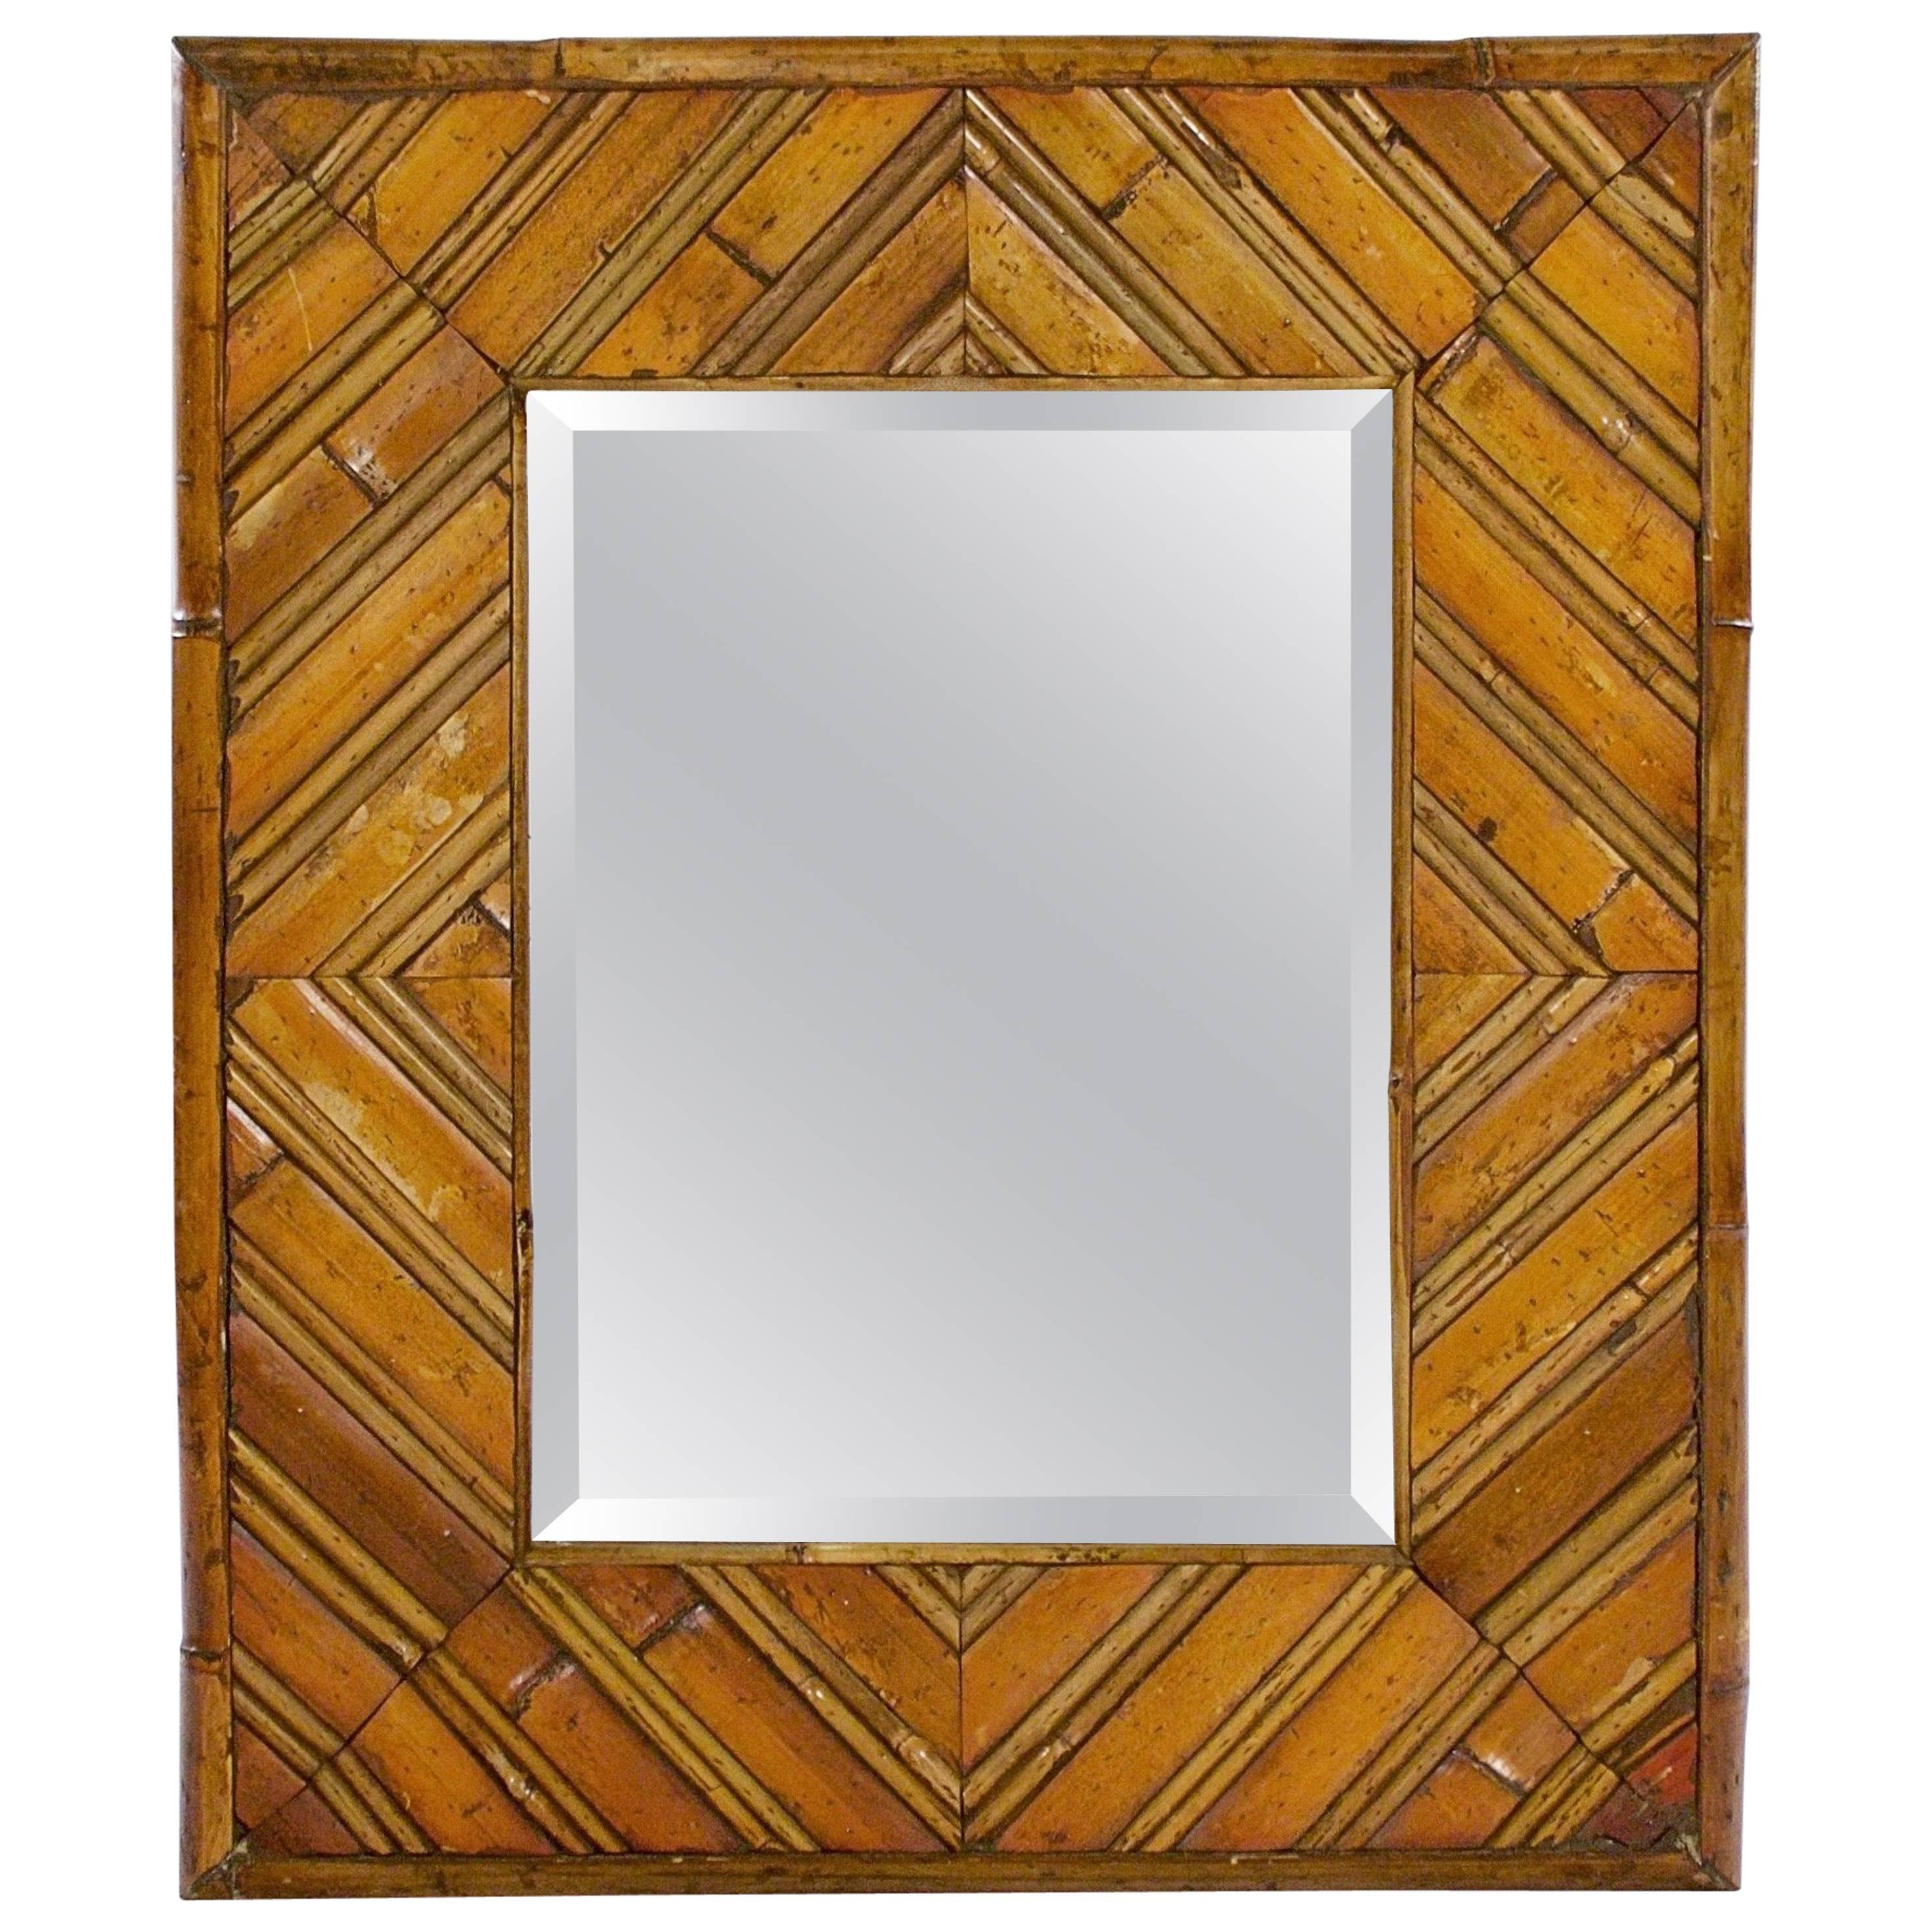 Rectangular Bamboo and Cane Work Mirror